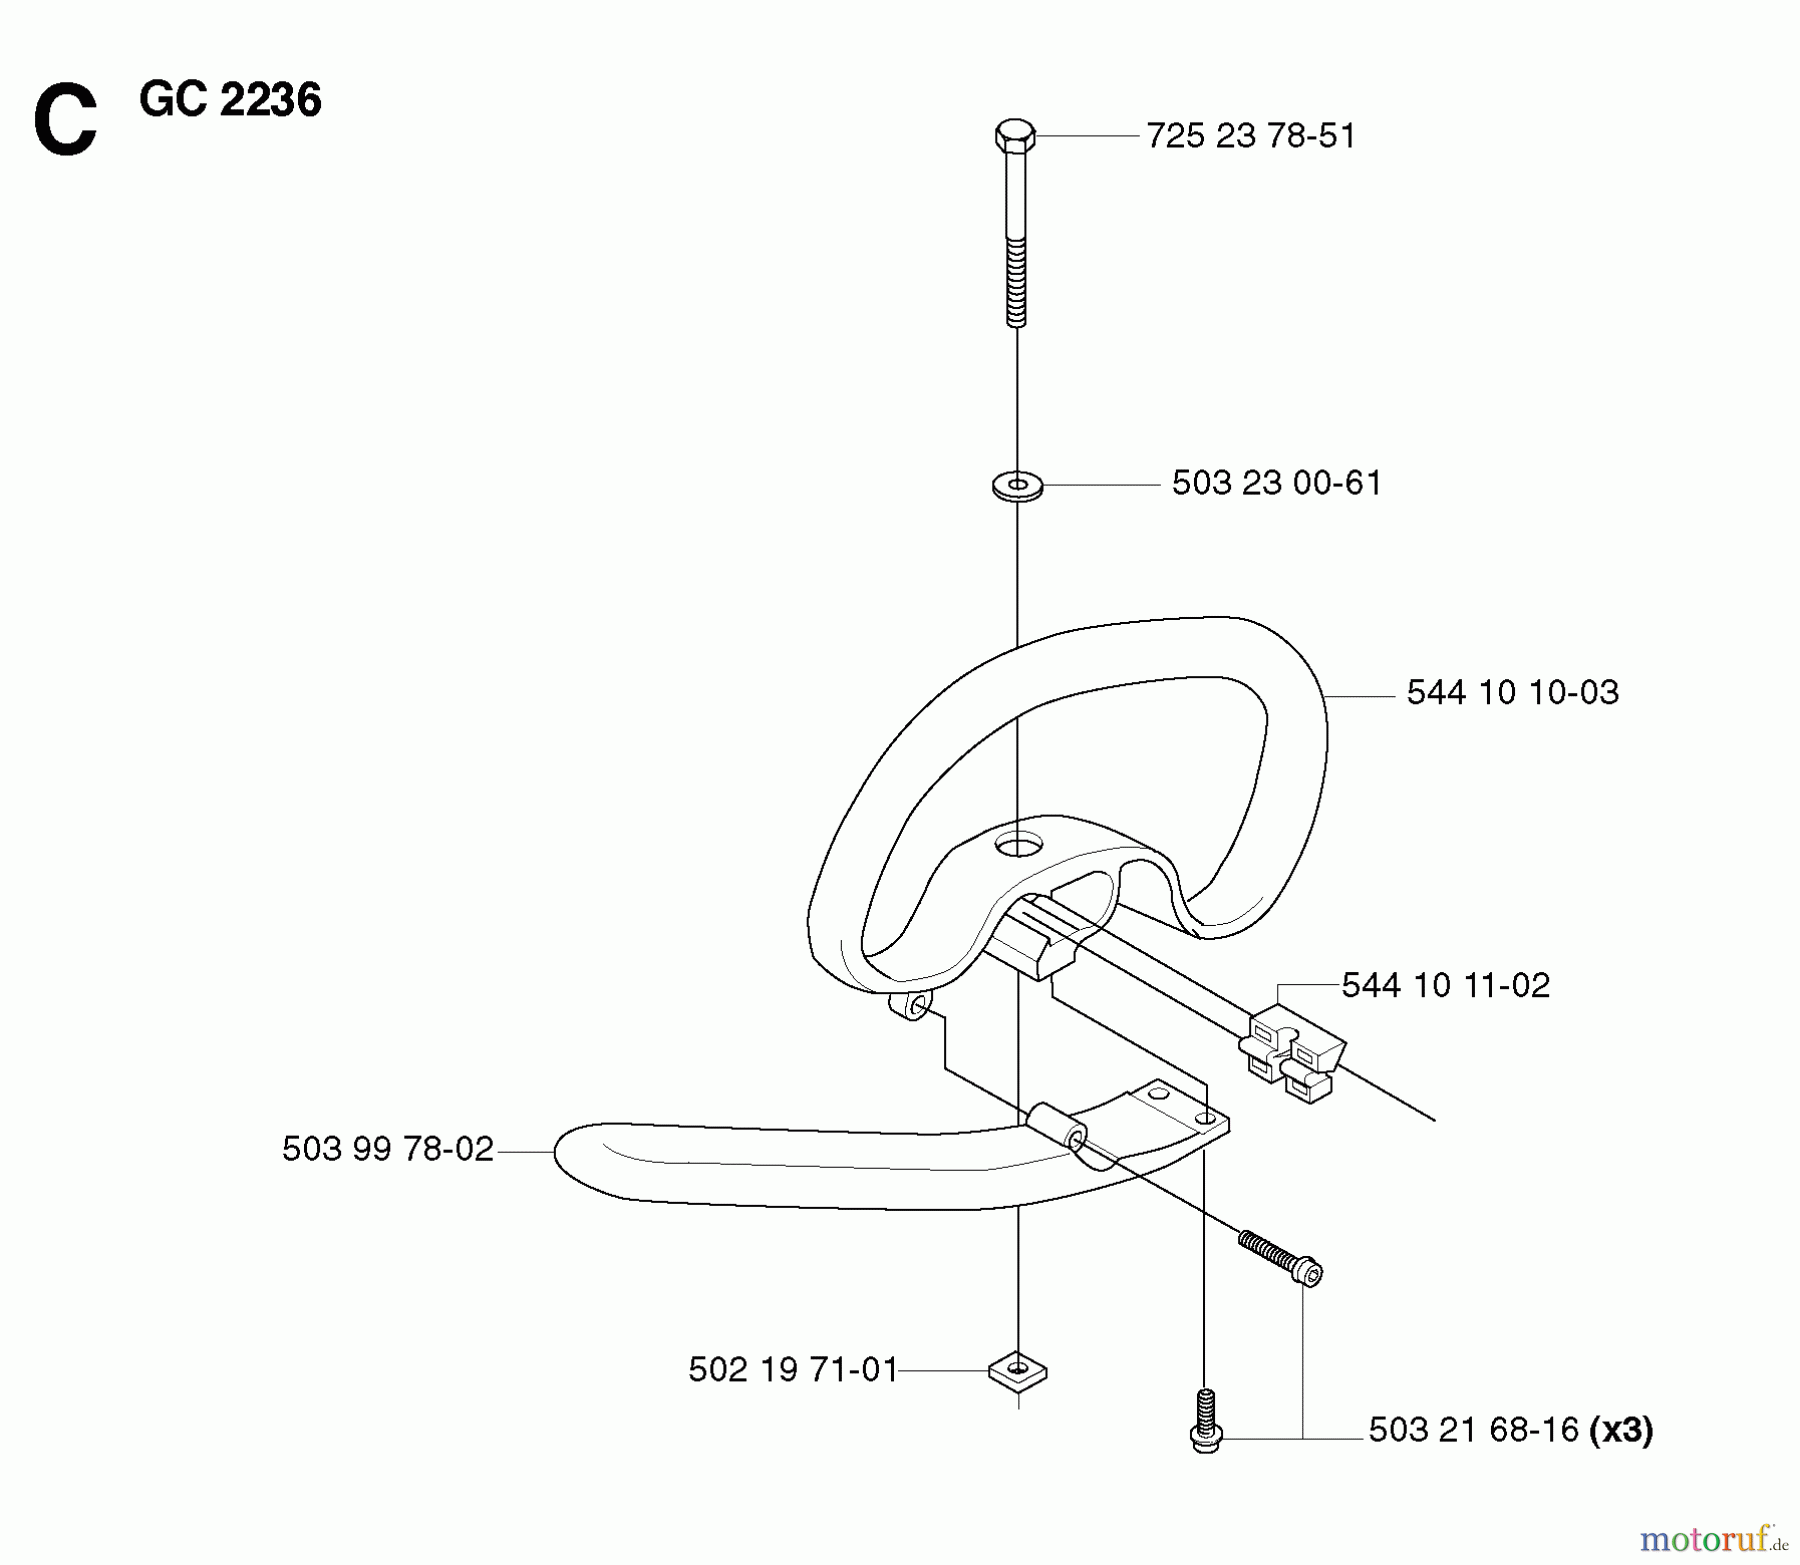  Jonsered Motorsensen, Trimmer BC2236 - Jonsered Brushcutter (2007-01) HANDLE